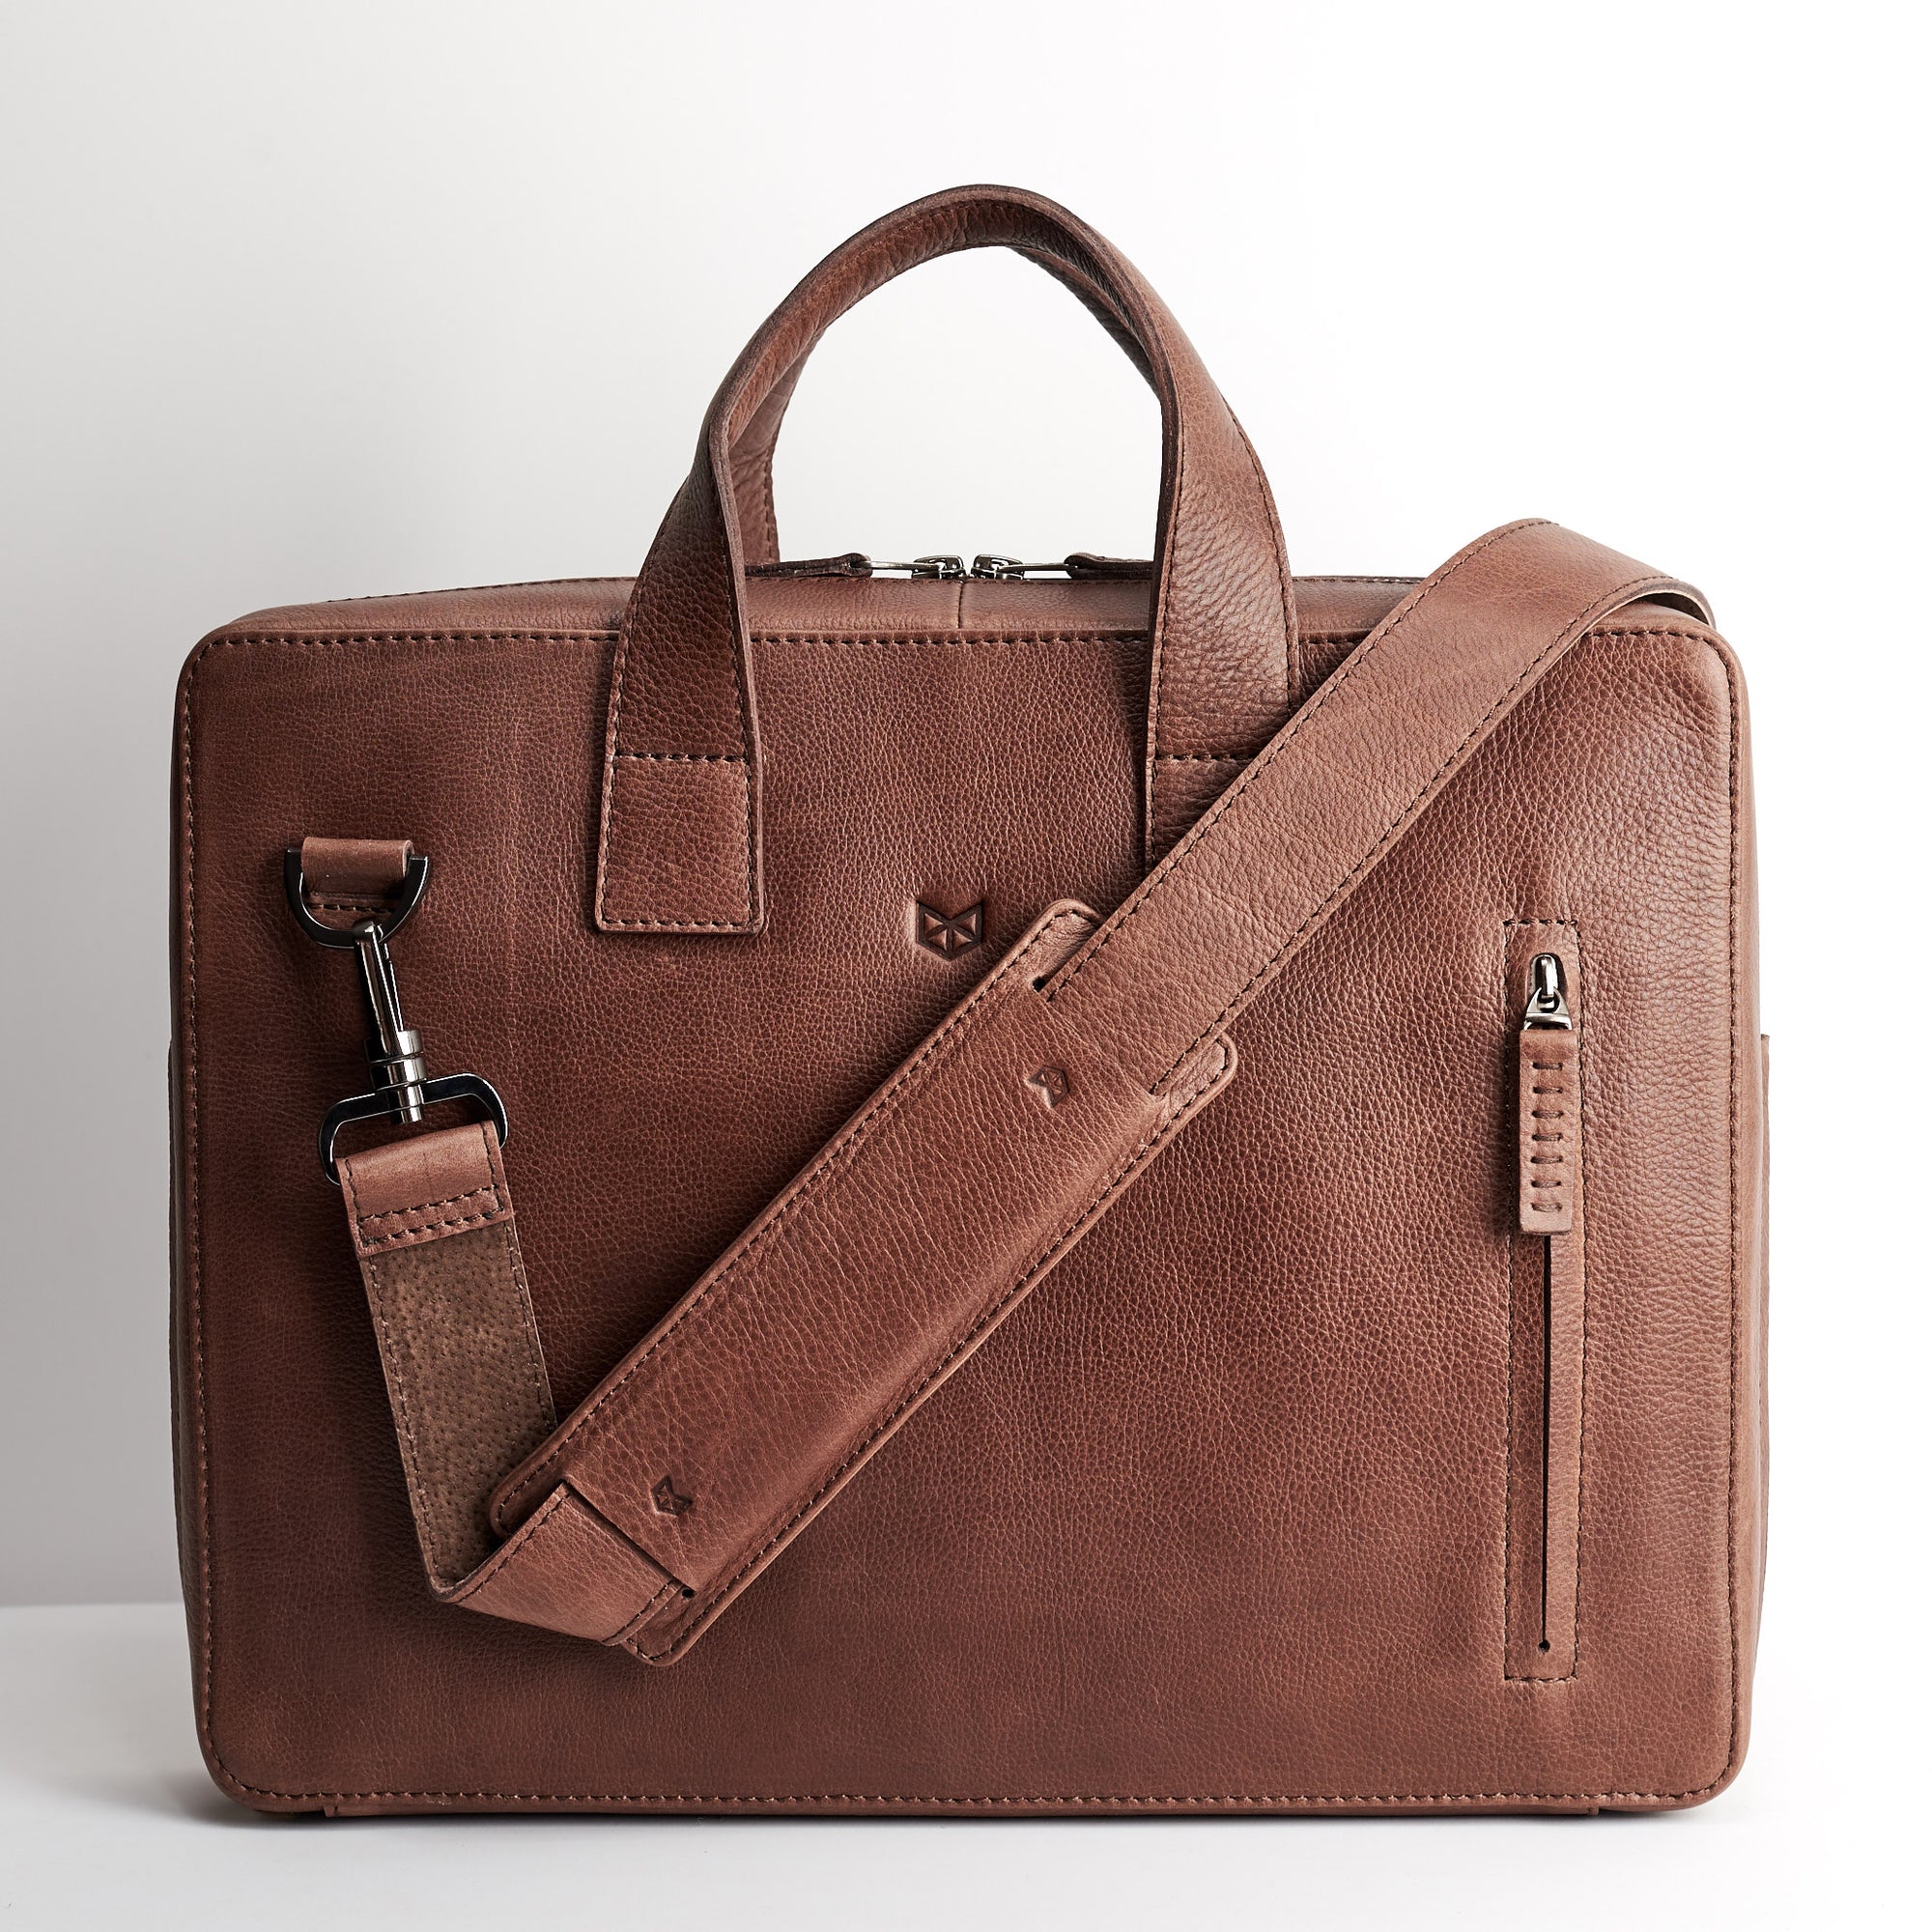 Extra padded shoulder strap. Brown leather briefcase, Macbook Pro 13inch 15inch inside pocket